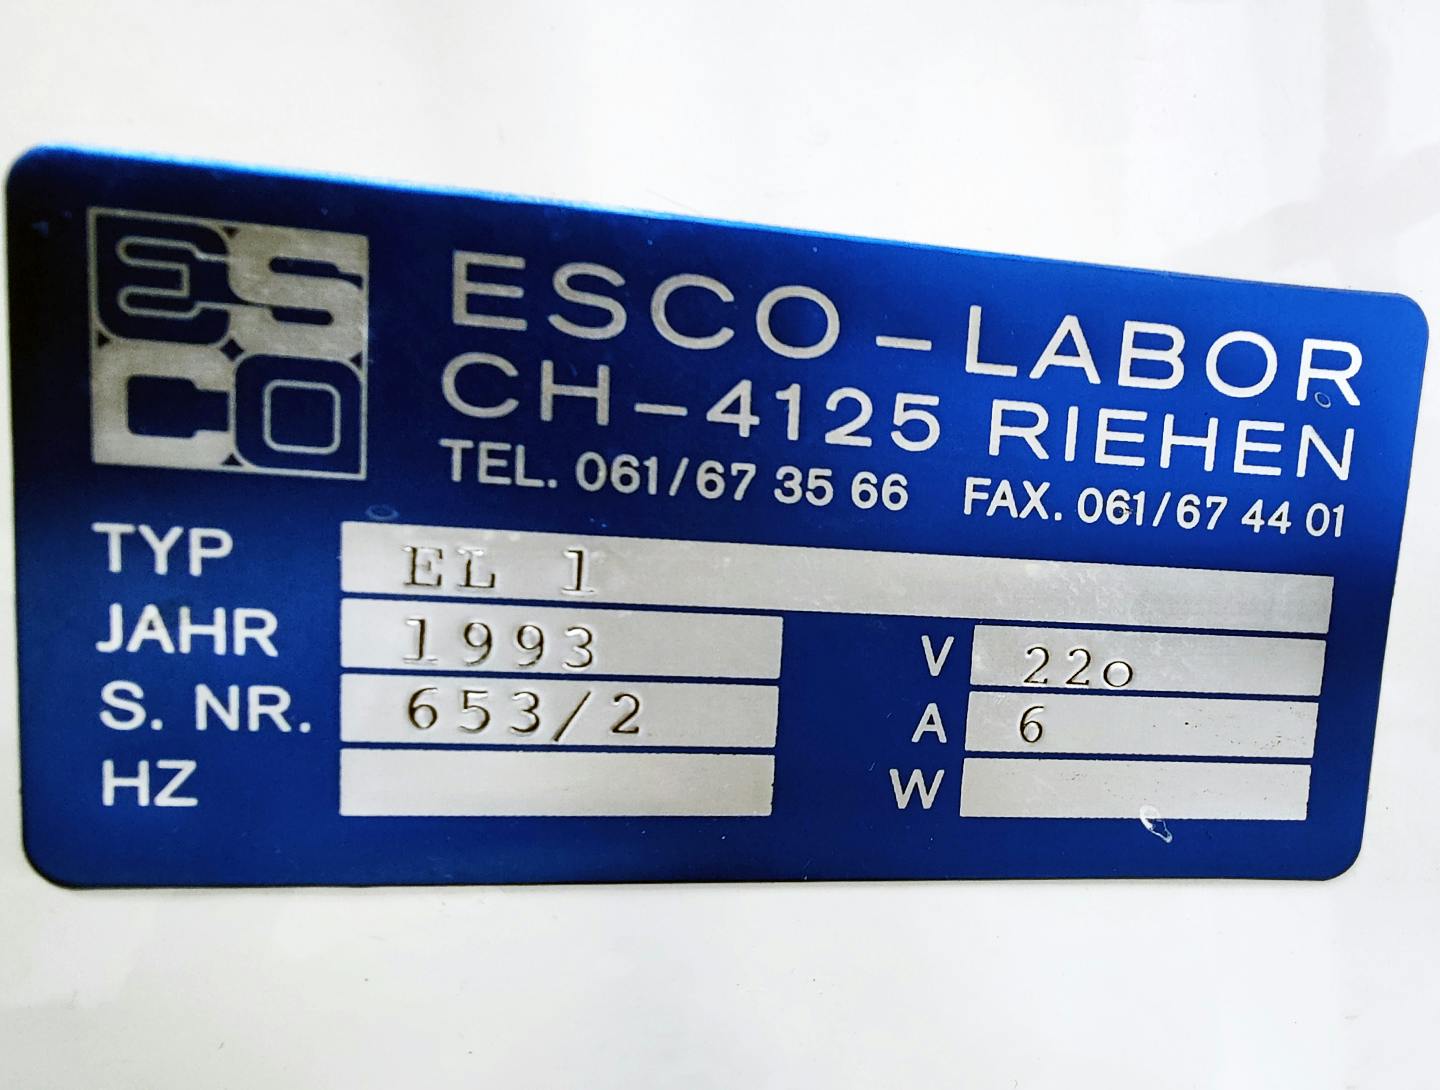 Esco Labor EL1 - Технологический сосуд - image 11